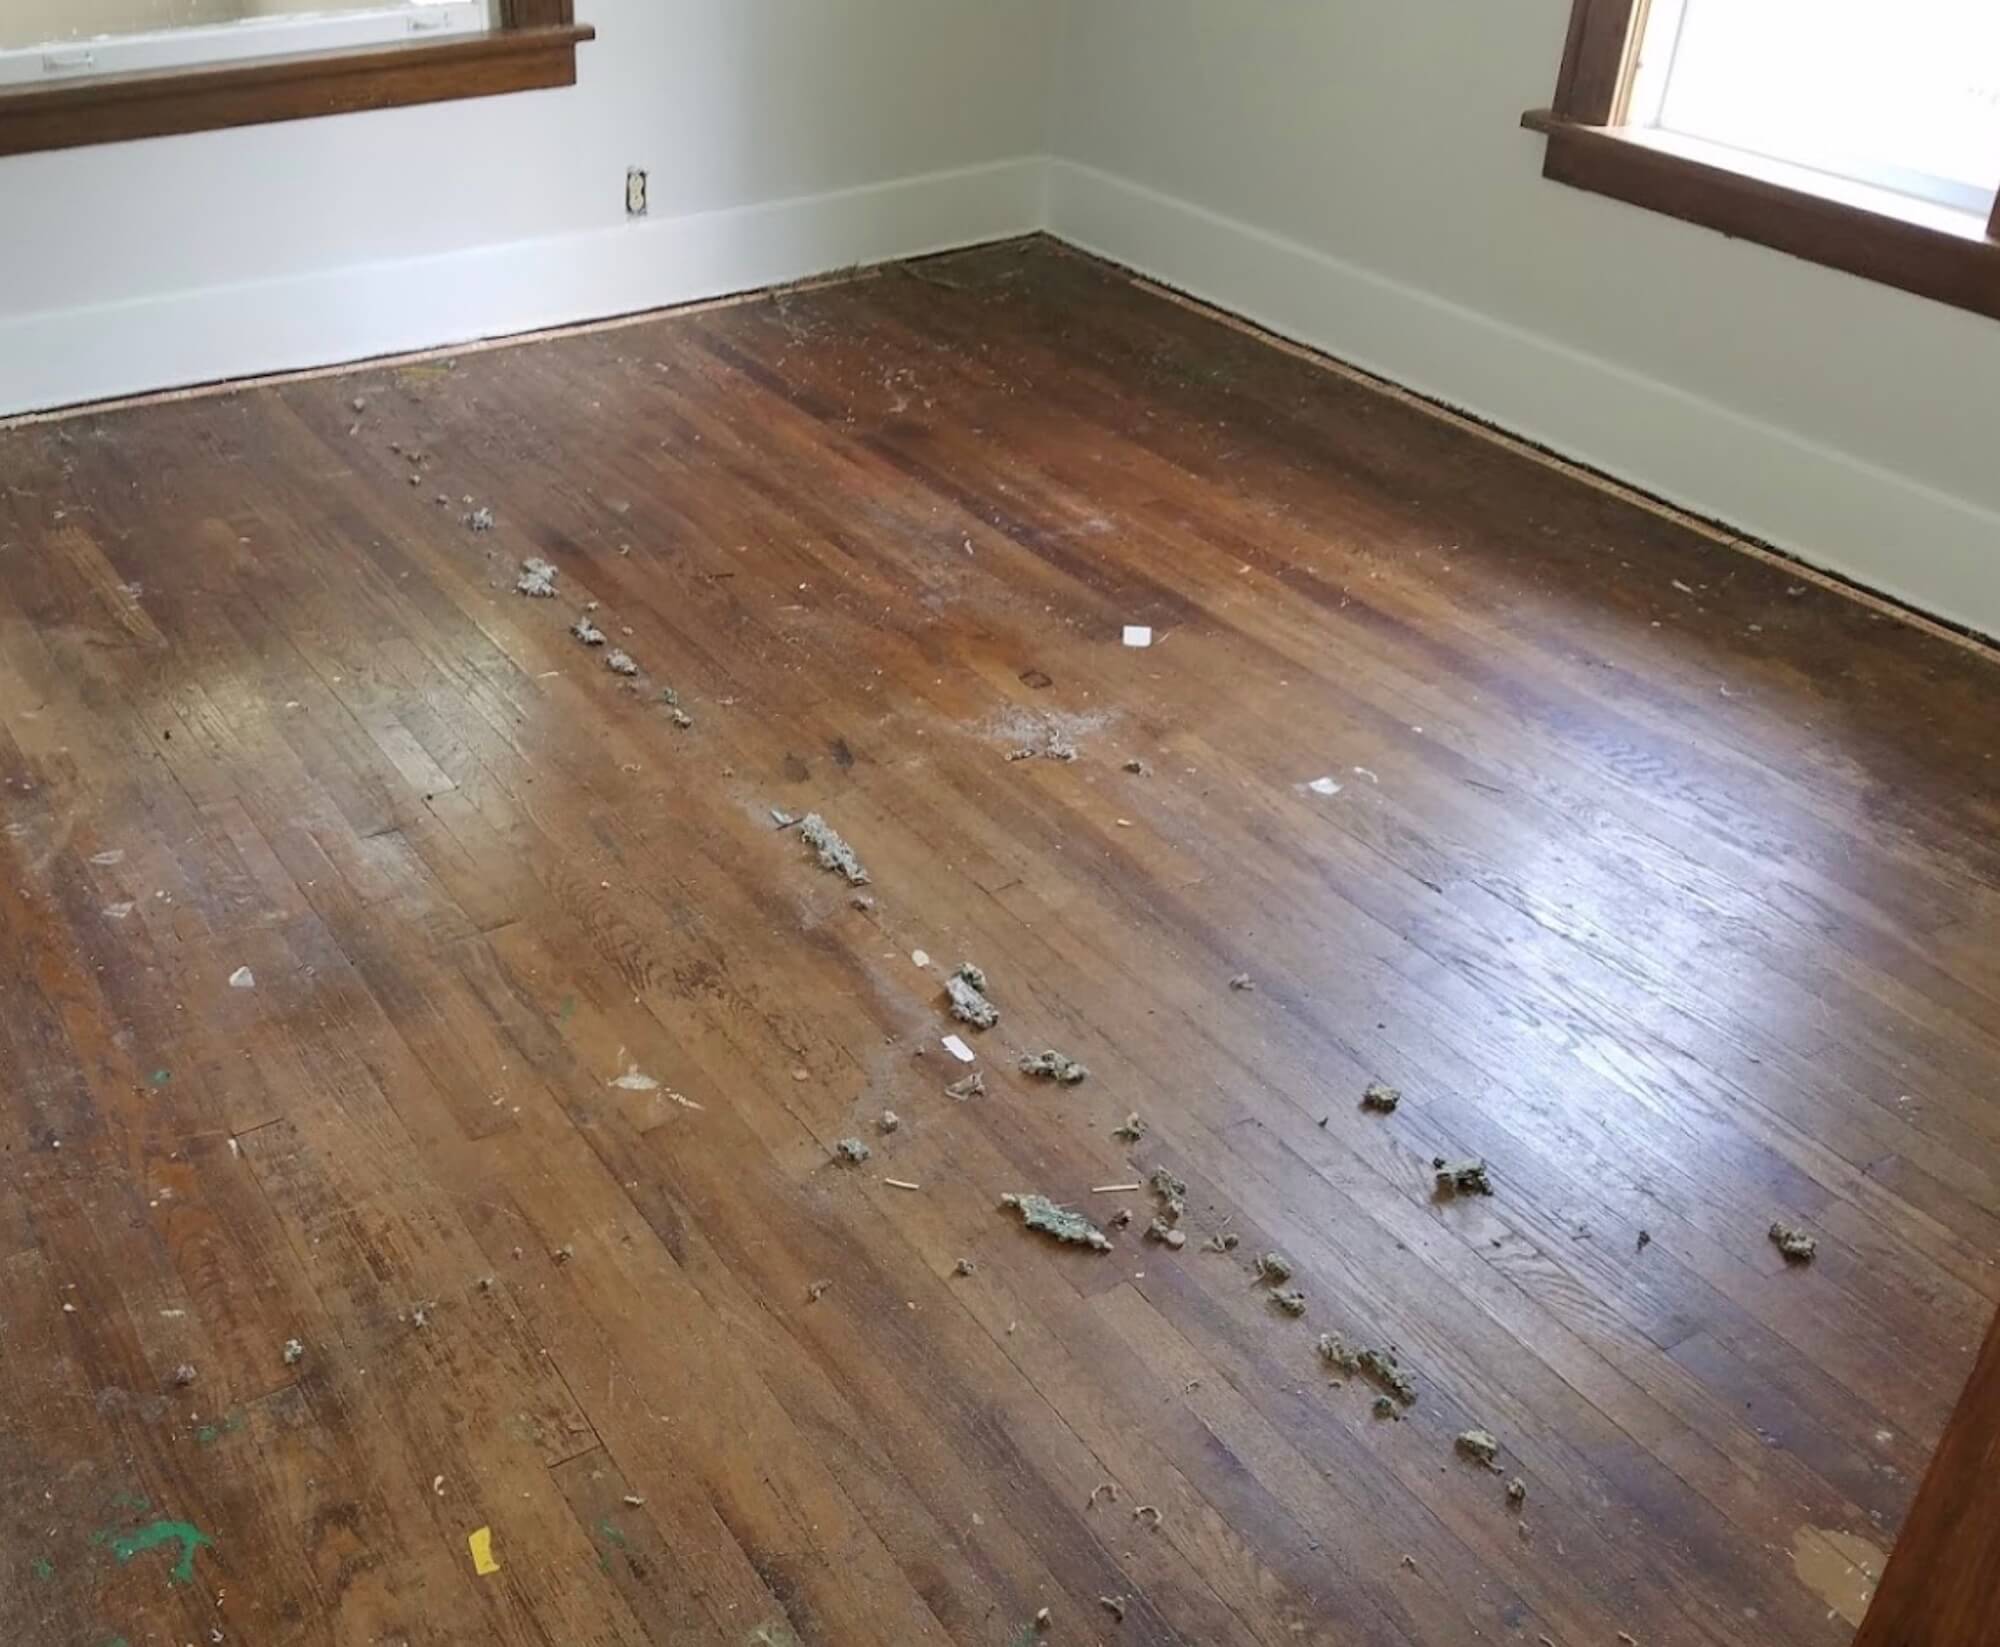 Dusty old hardwood flooring